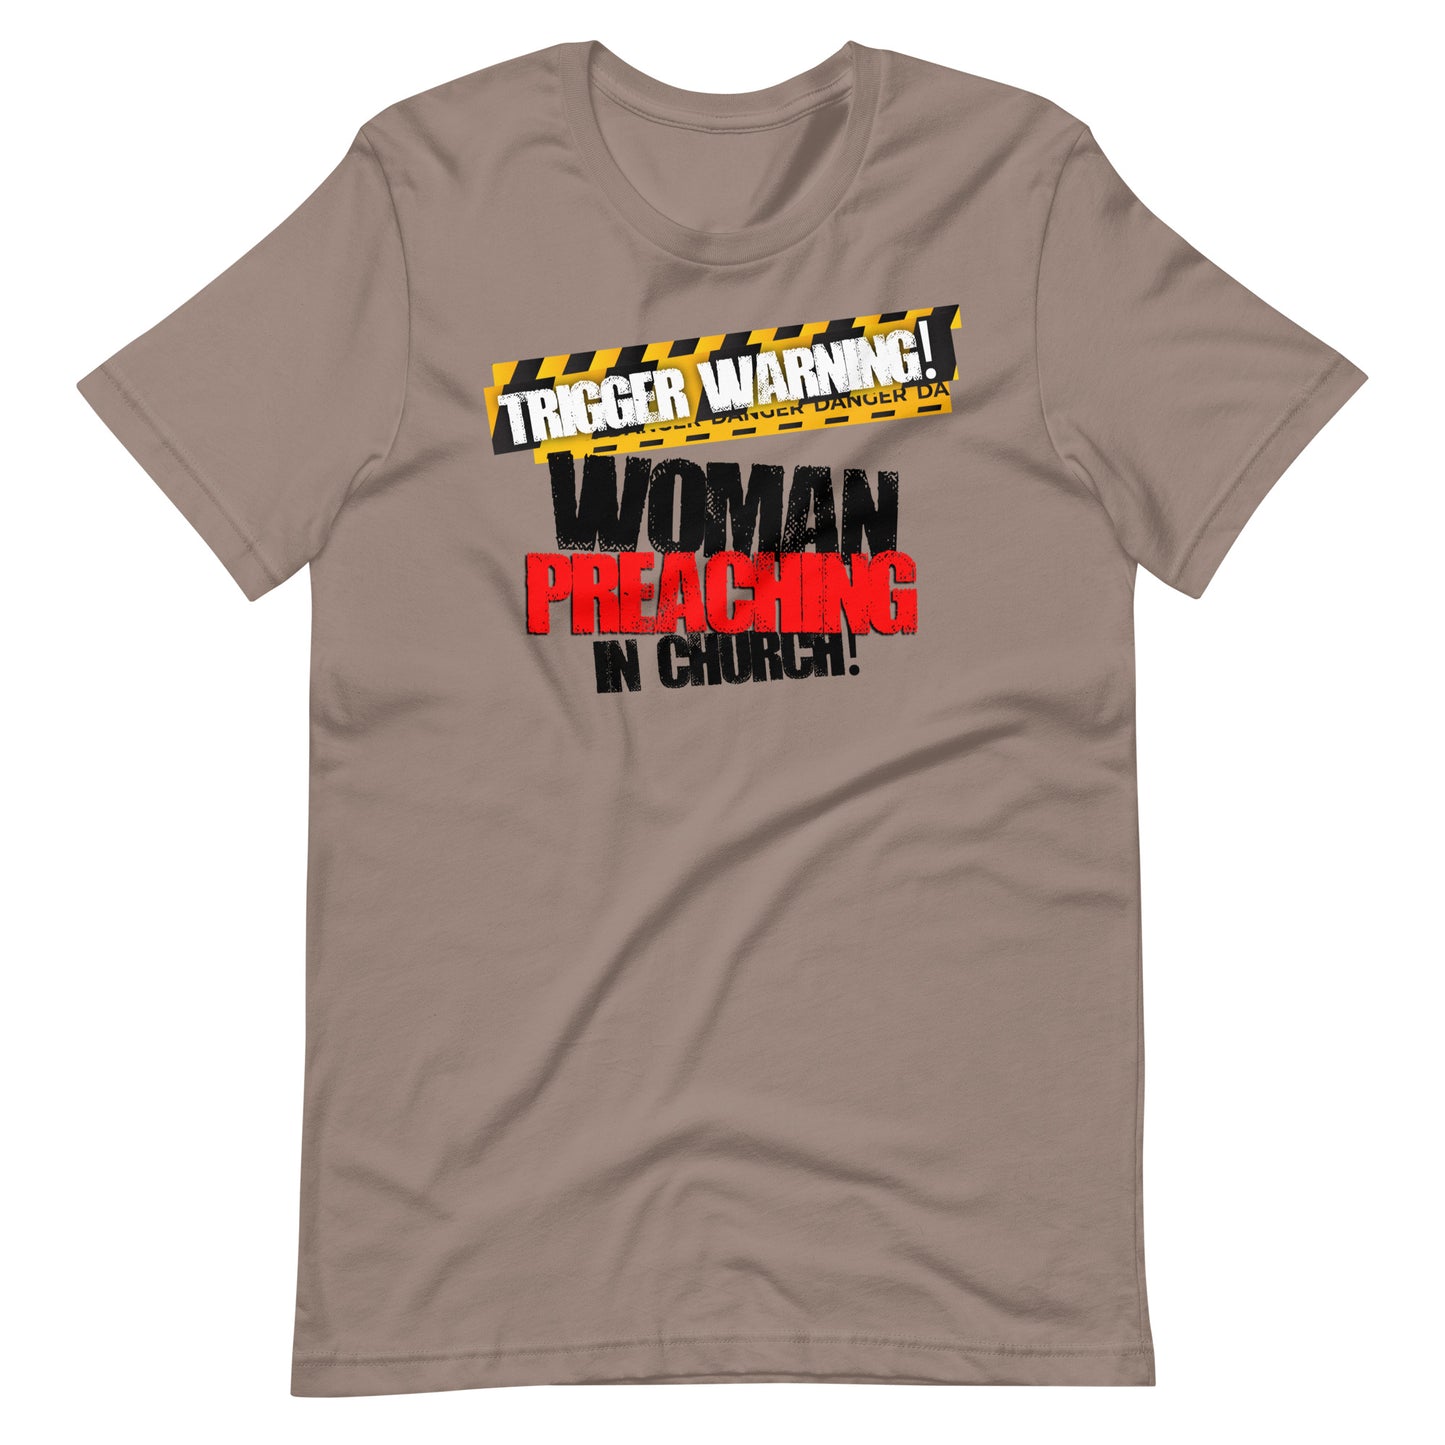 Trigger Warning! Woman Preaching T-shirt